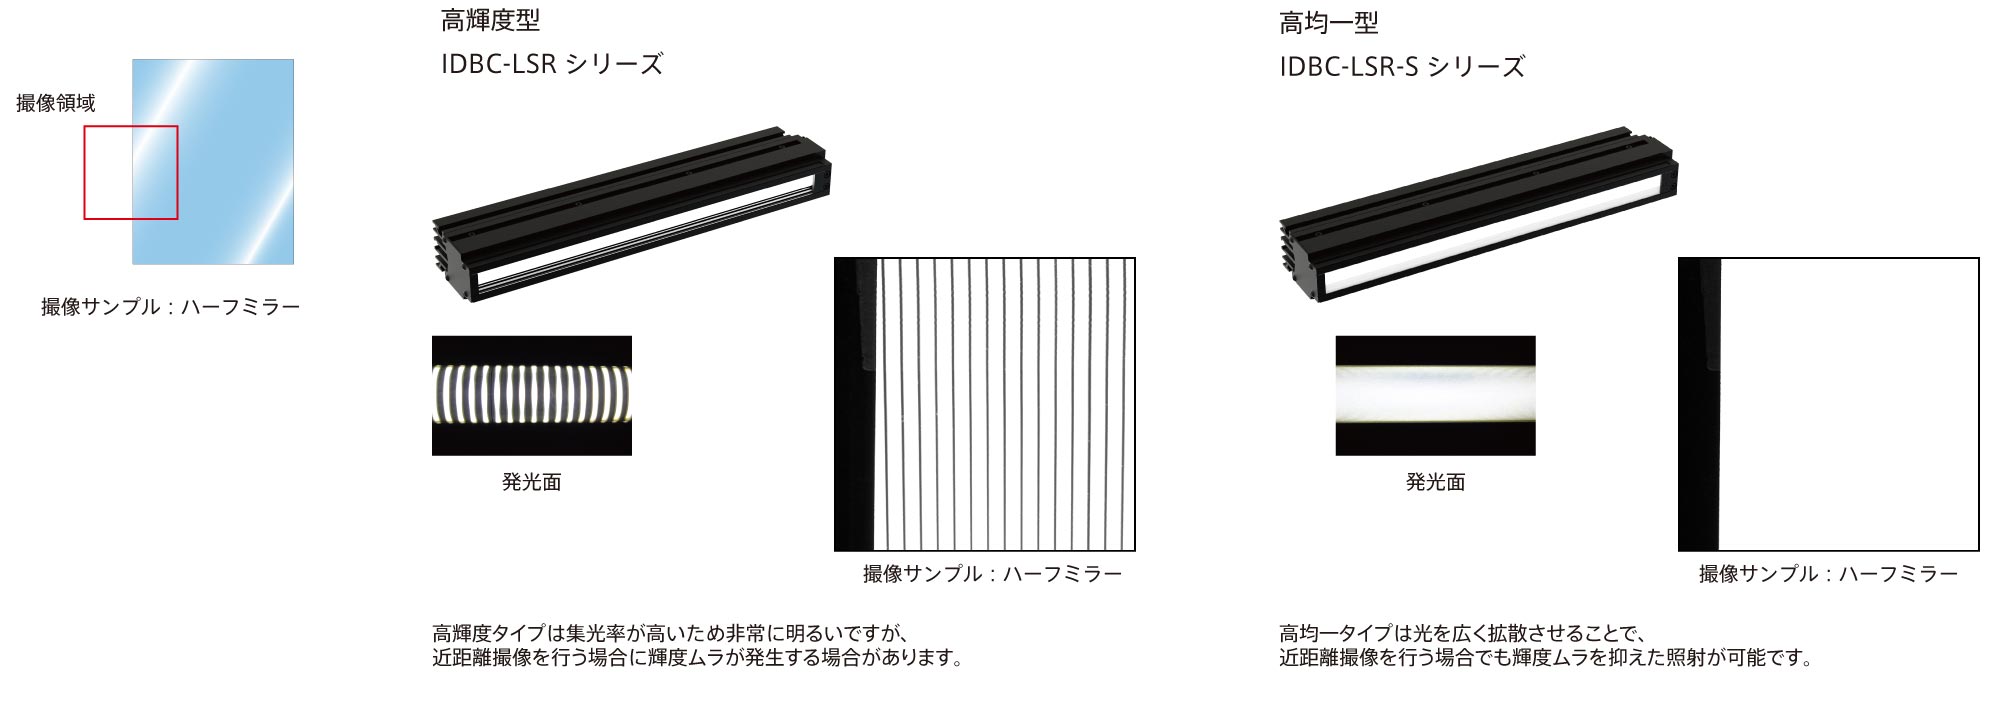 IDBC-LSR Product Description 01